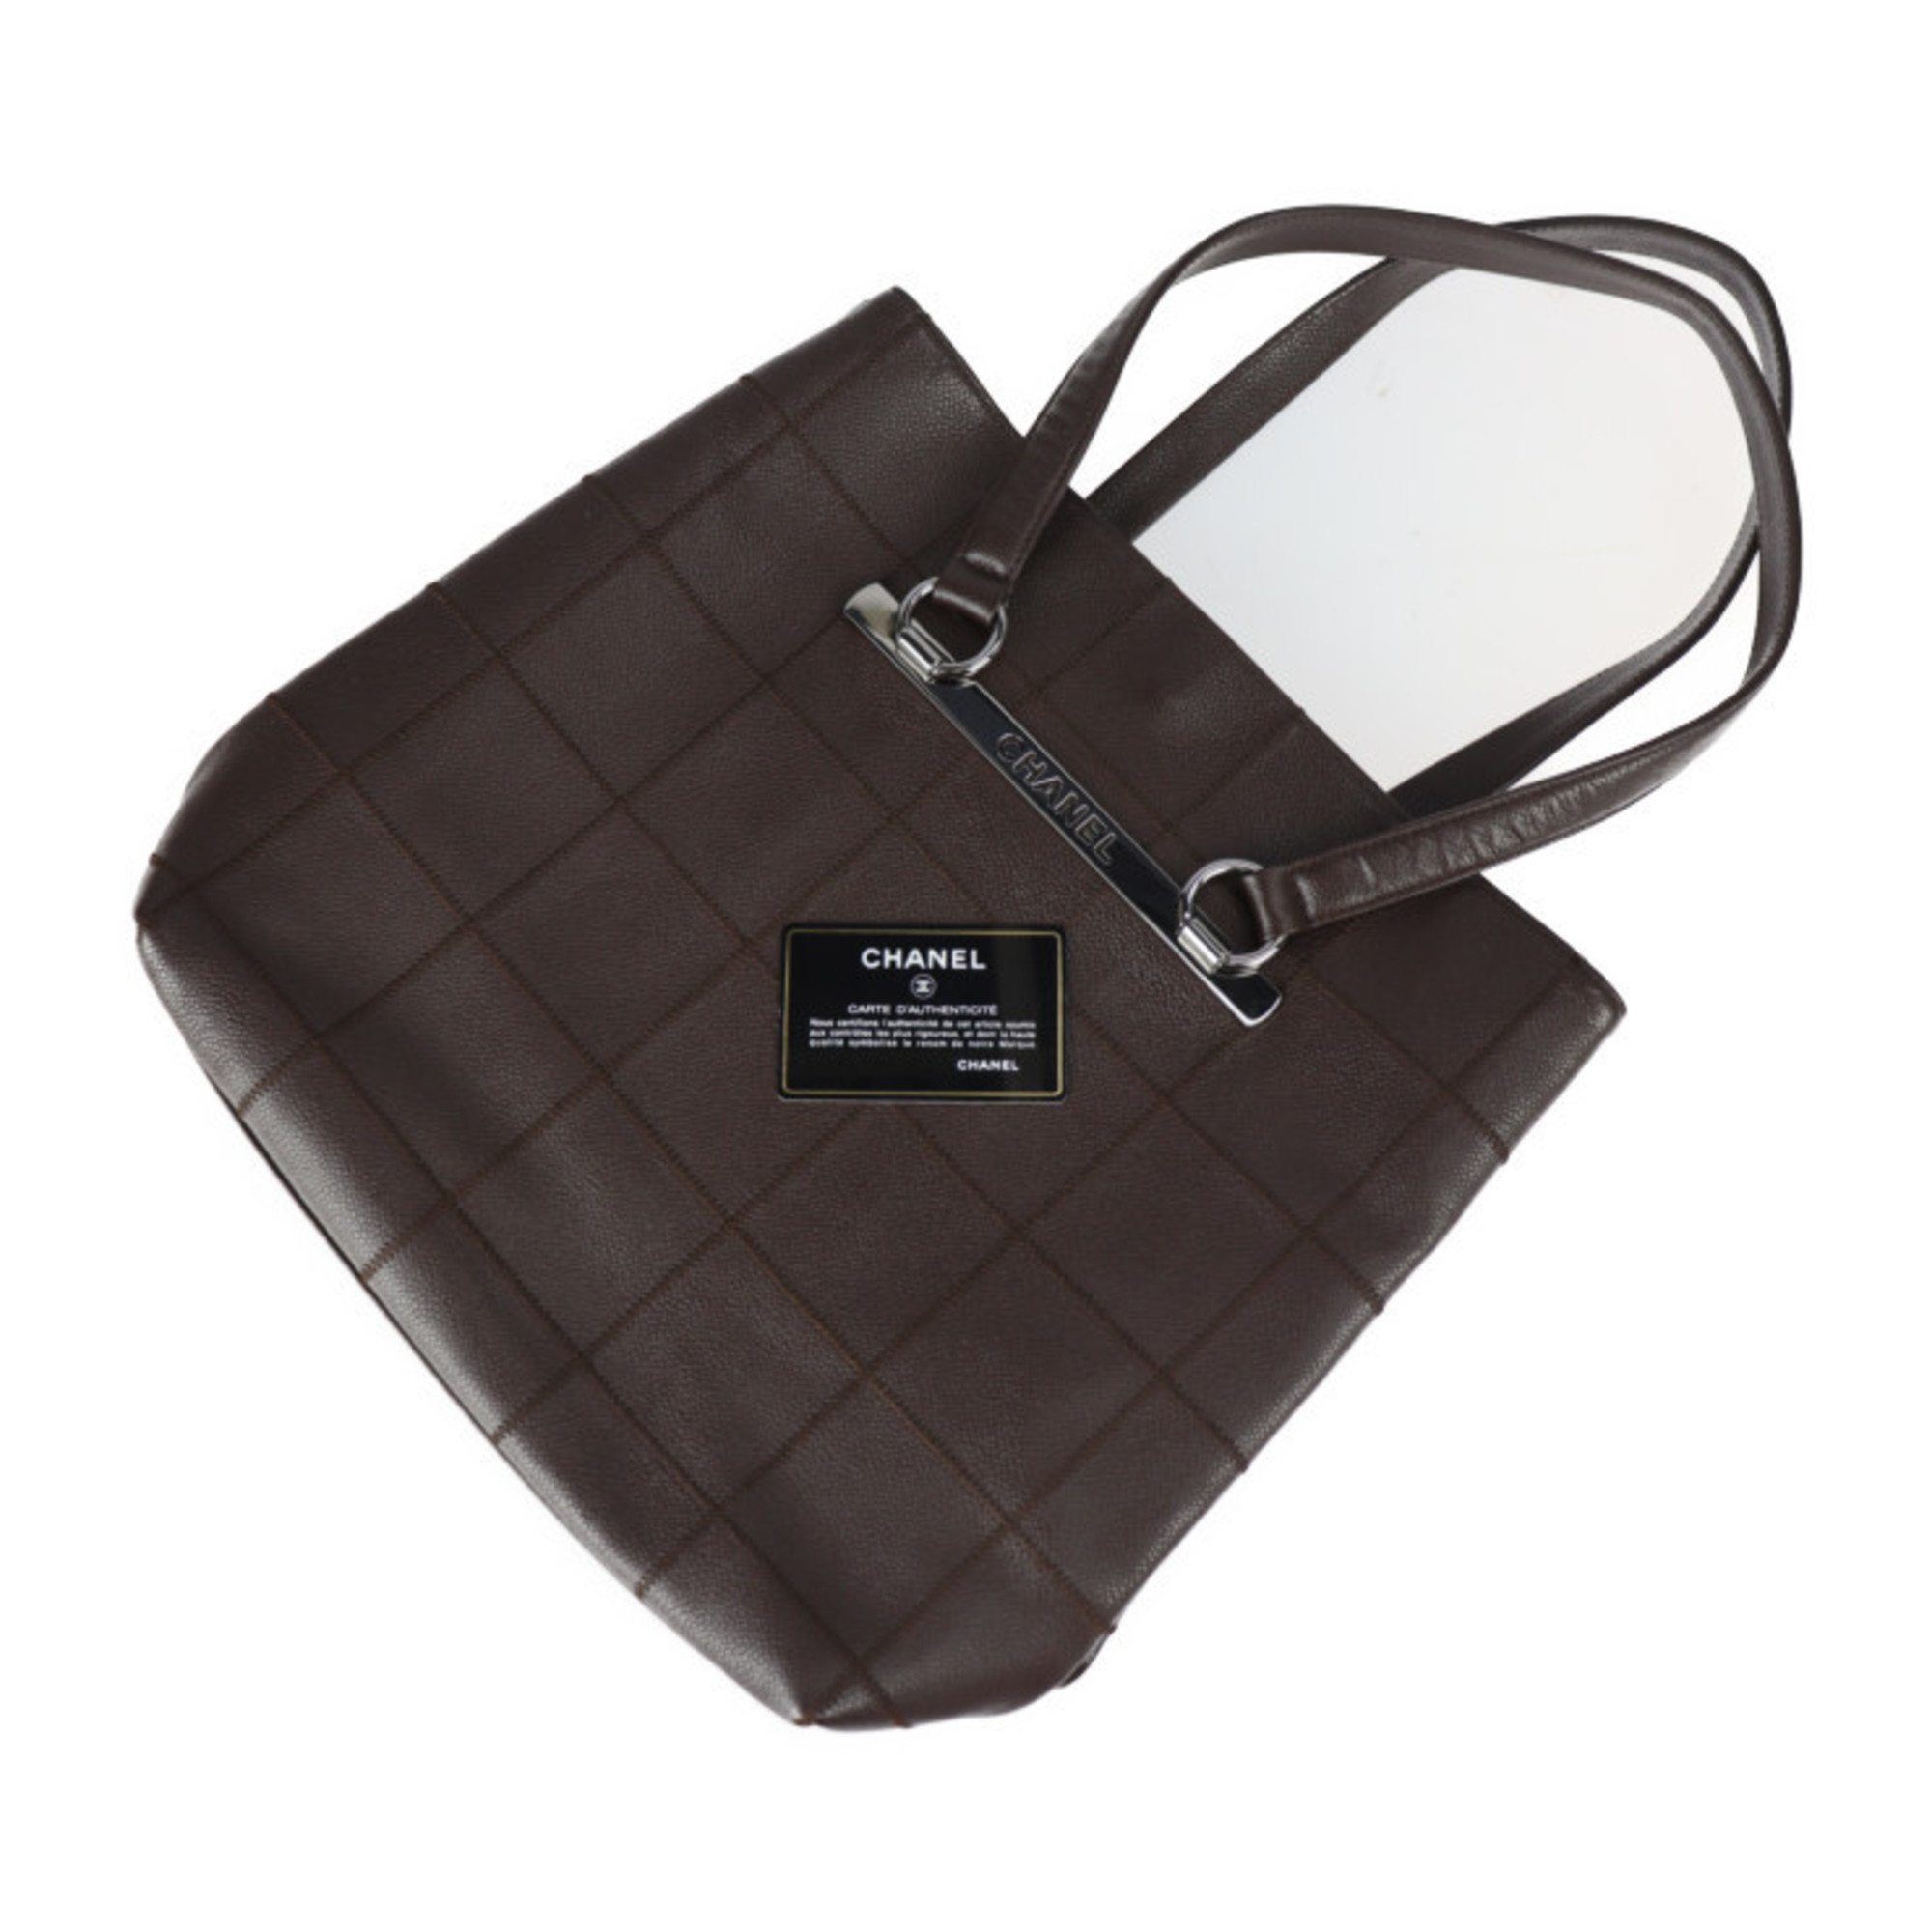 CHANEL Chanel chocolate bar tote bag caviar skin dark brown silver metal fittings shoulder wild stitch 9 series